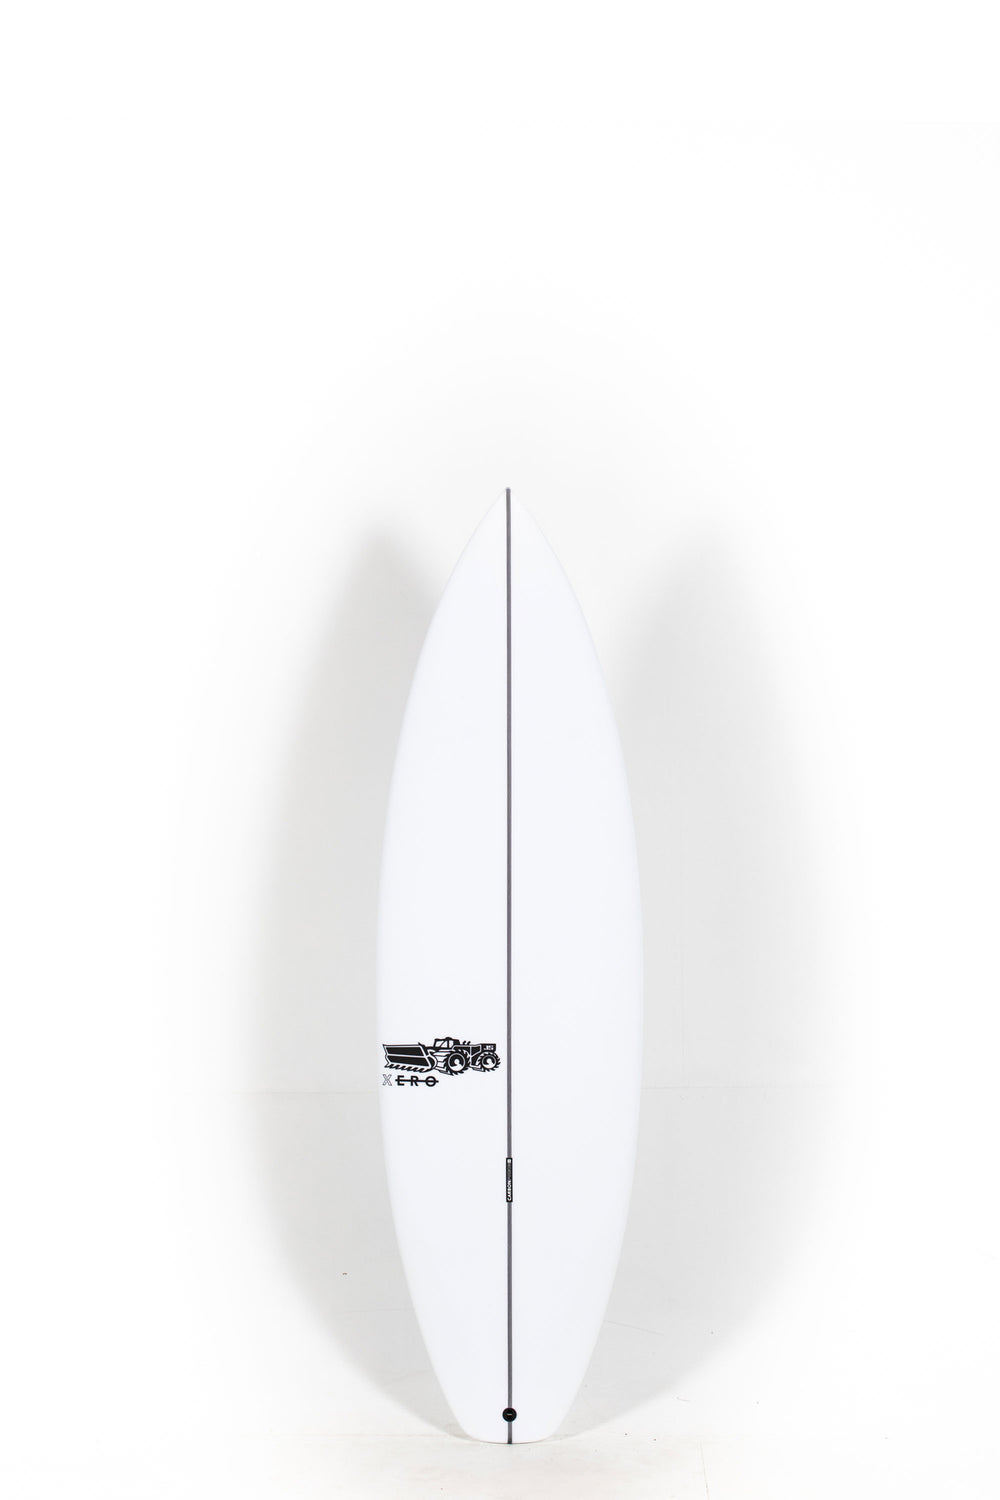 Pukas Surf Shop - JS Surfboards - XERO - 5'10